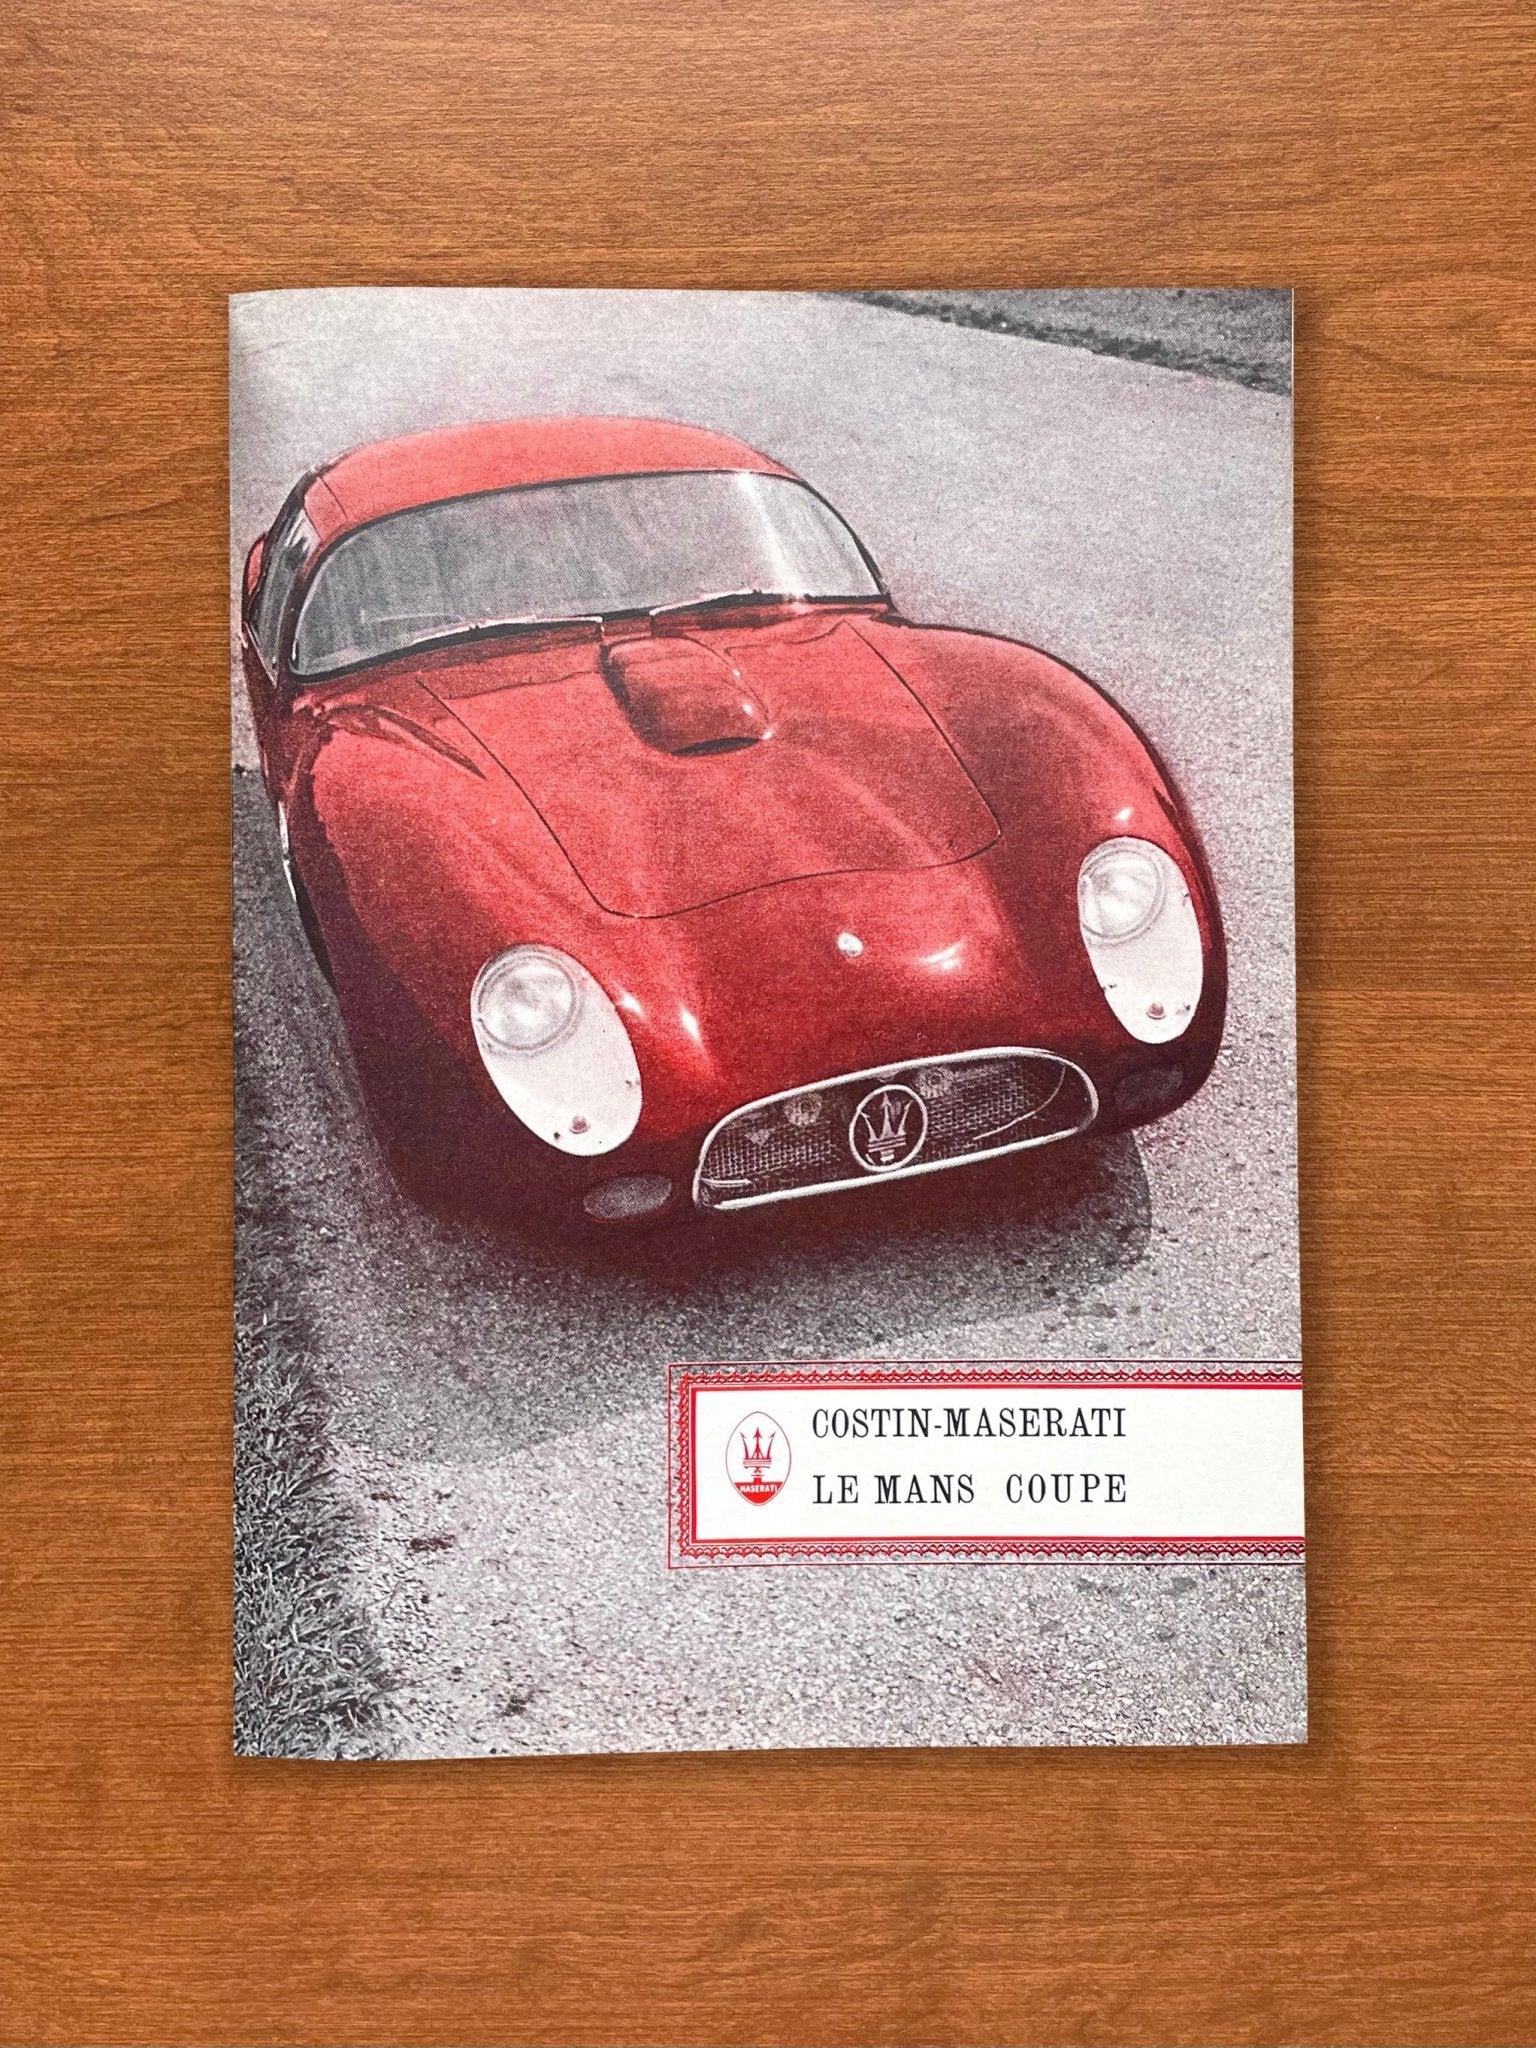 1963 Costin Maserati Le Mans Coupe Image Advertisement